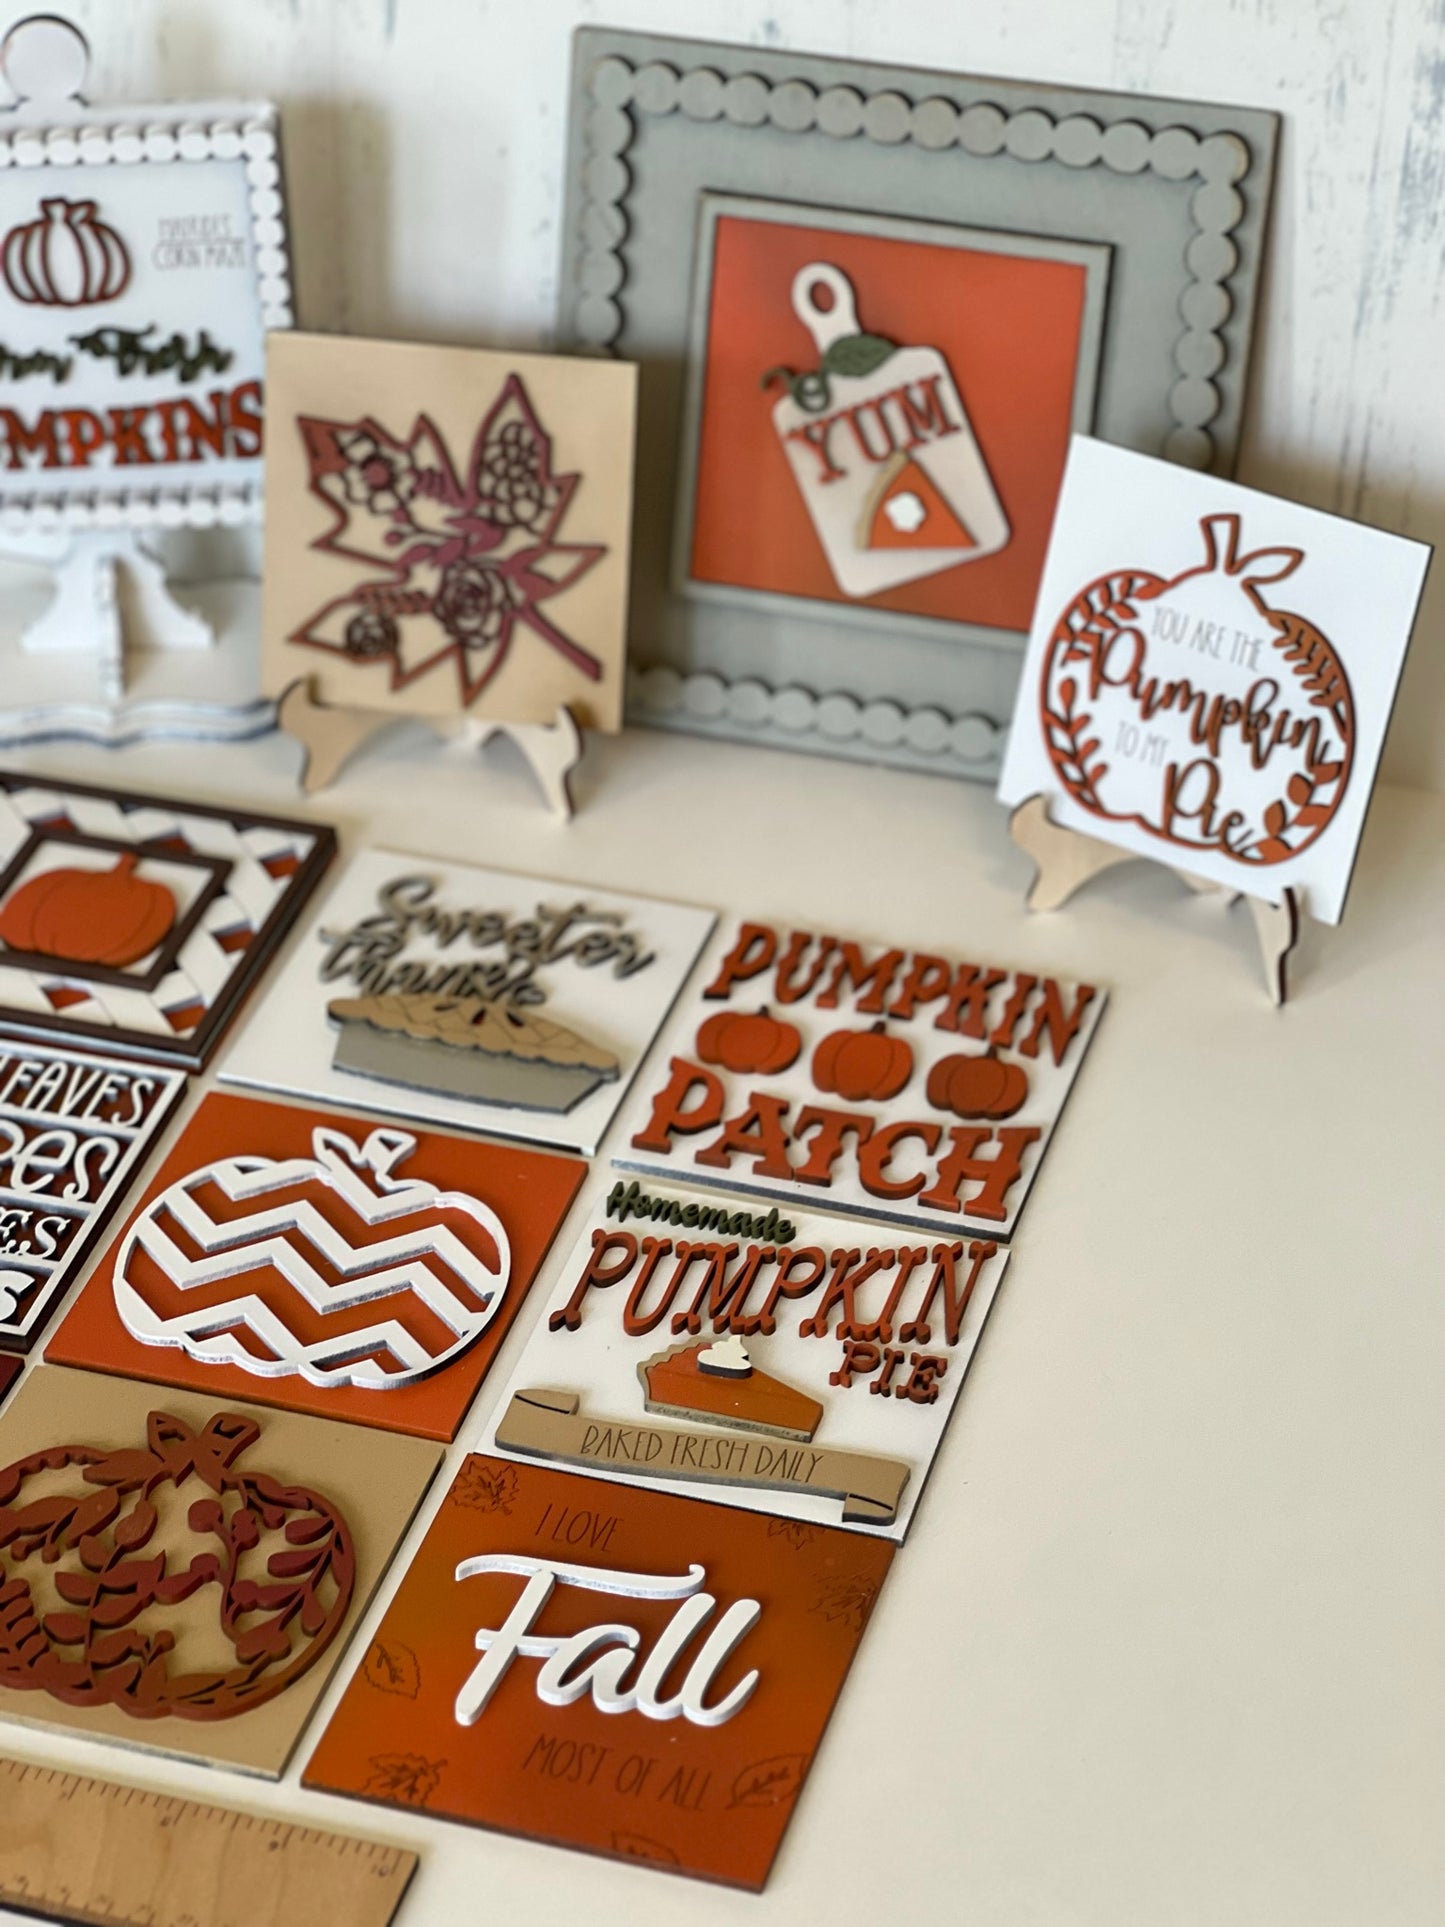 Fall & Pumpkin Pie Leaning Ladder Interchangeable Signs